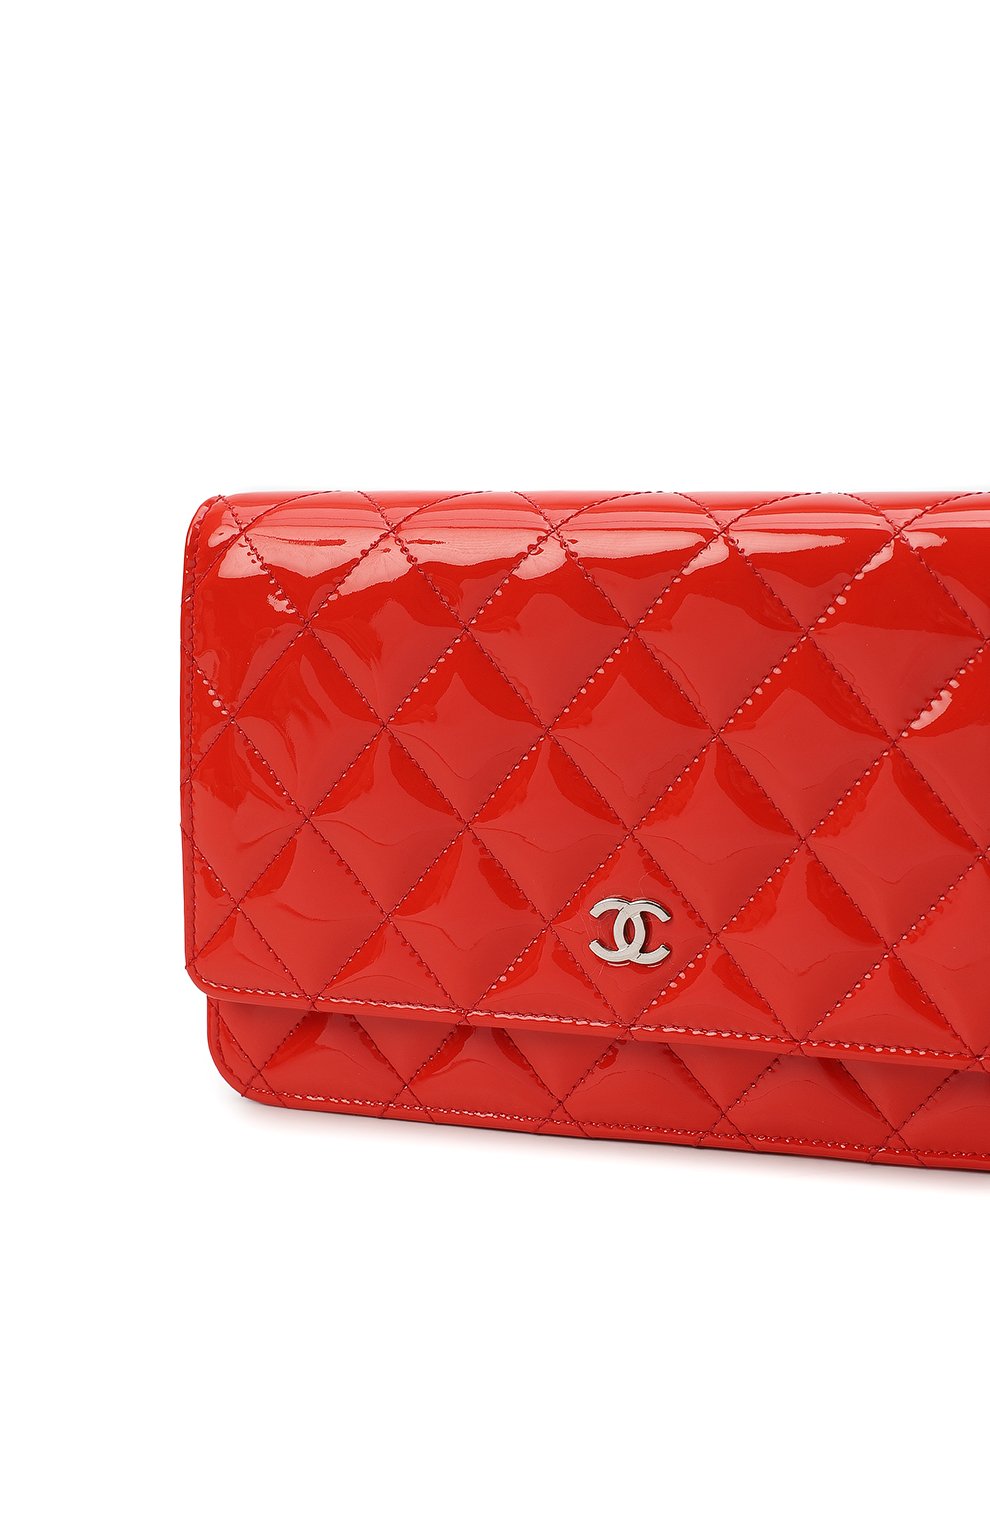 Сумка CC Wallet On Chain | Chanel | Красный - 6